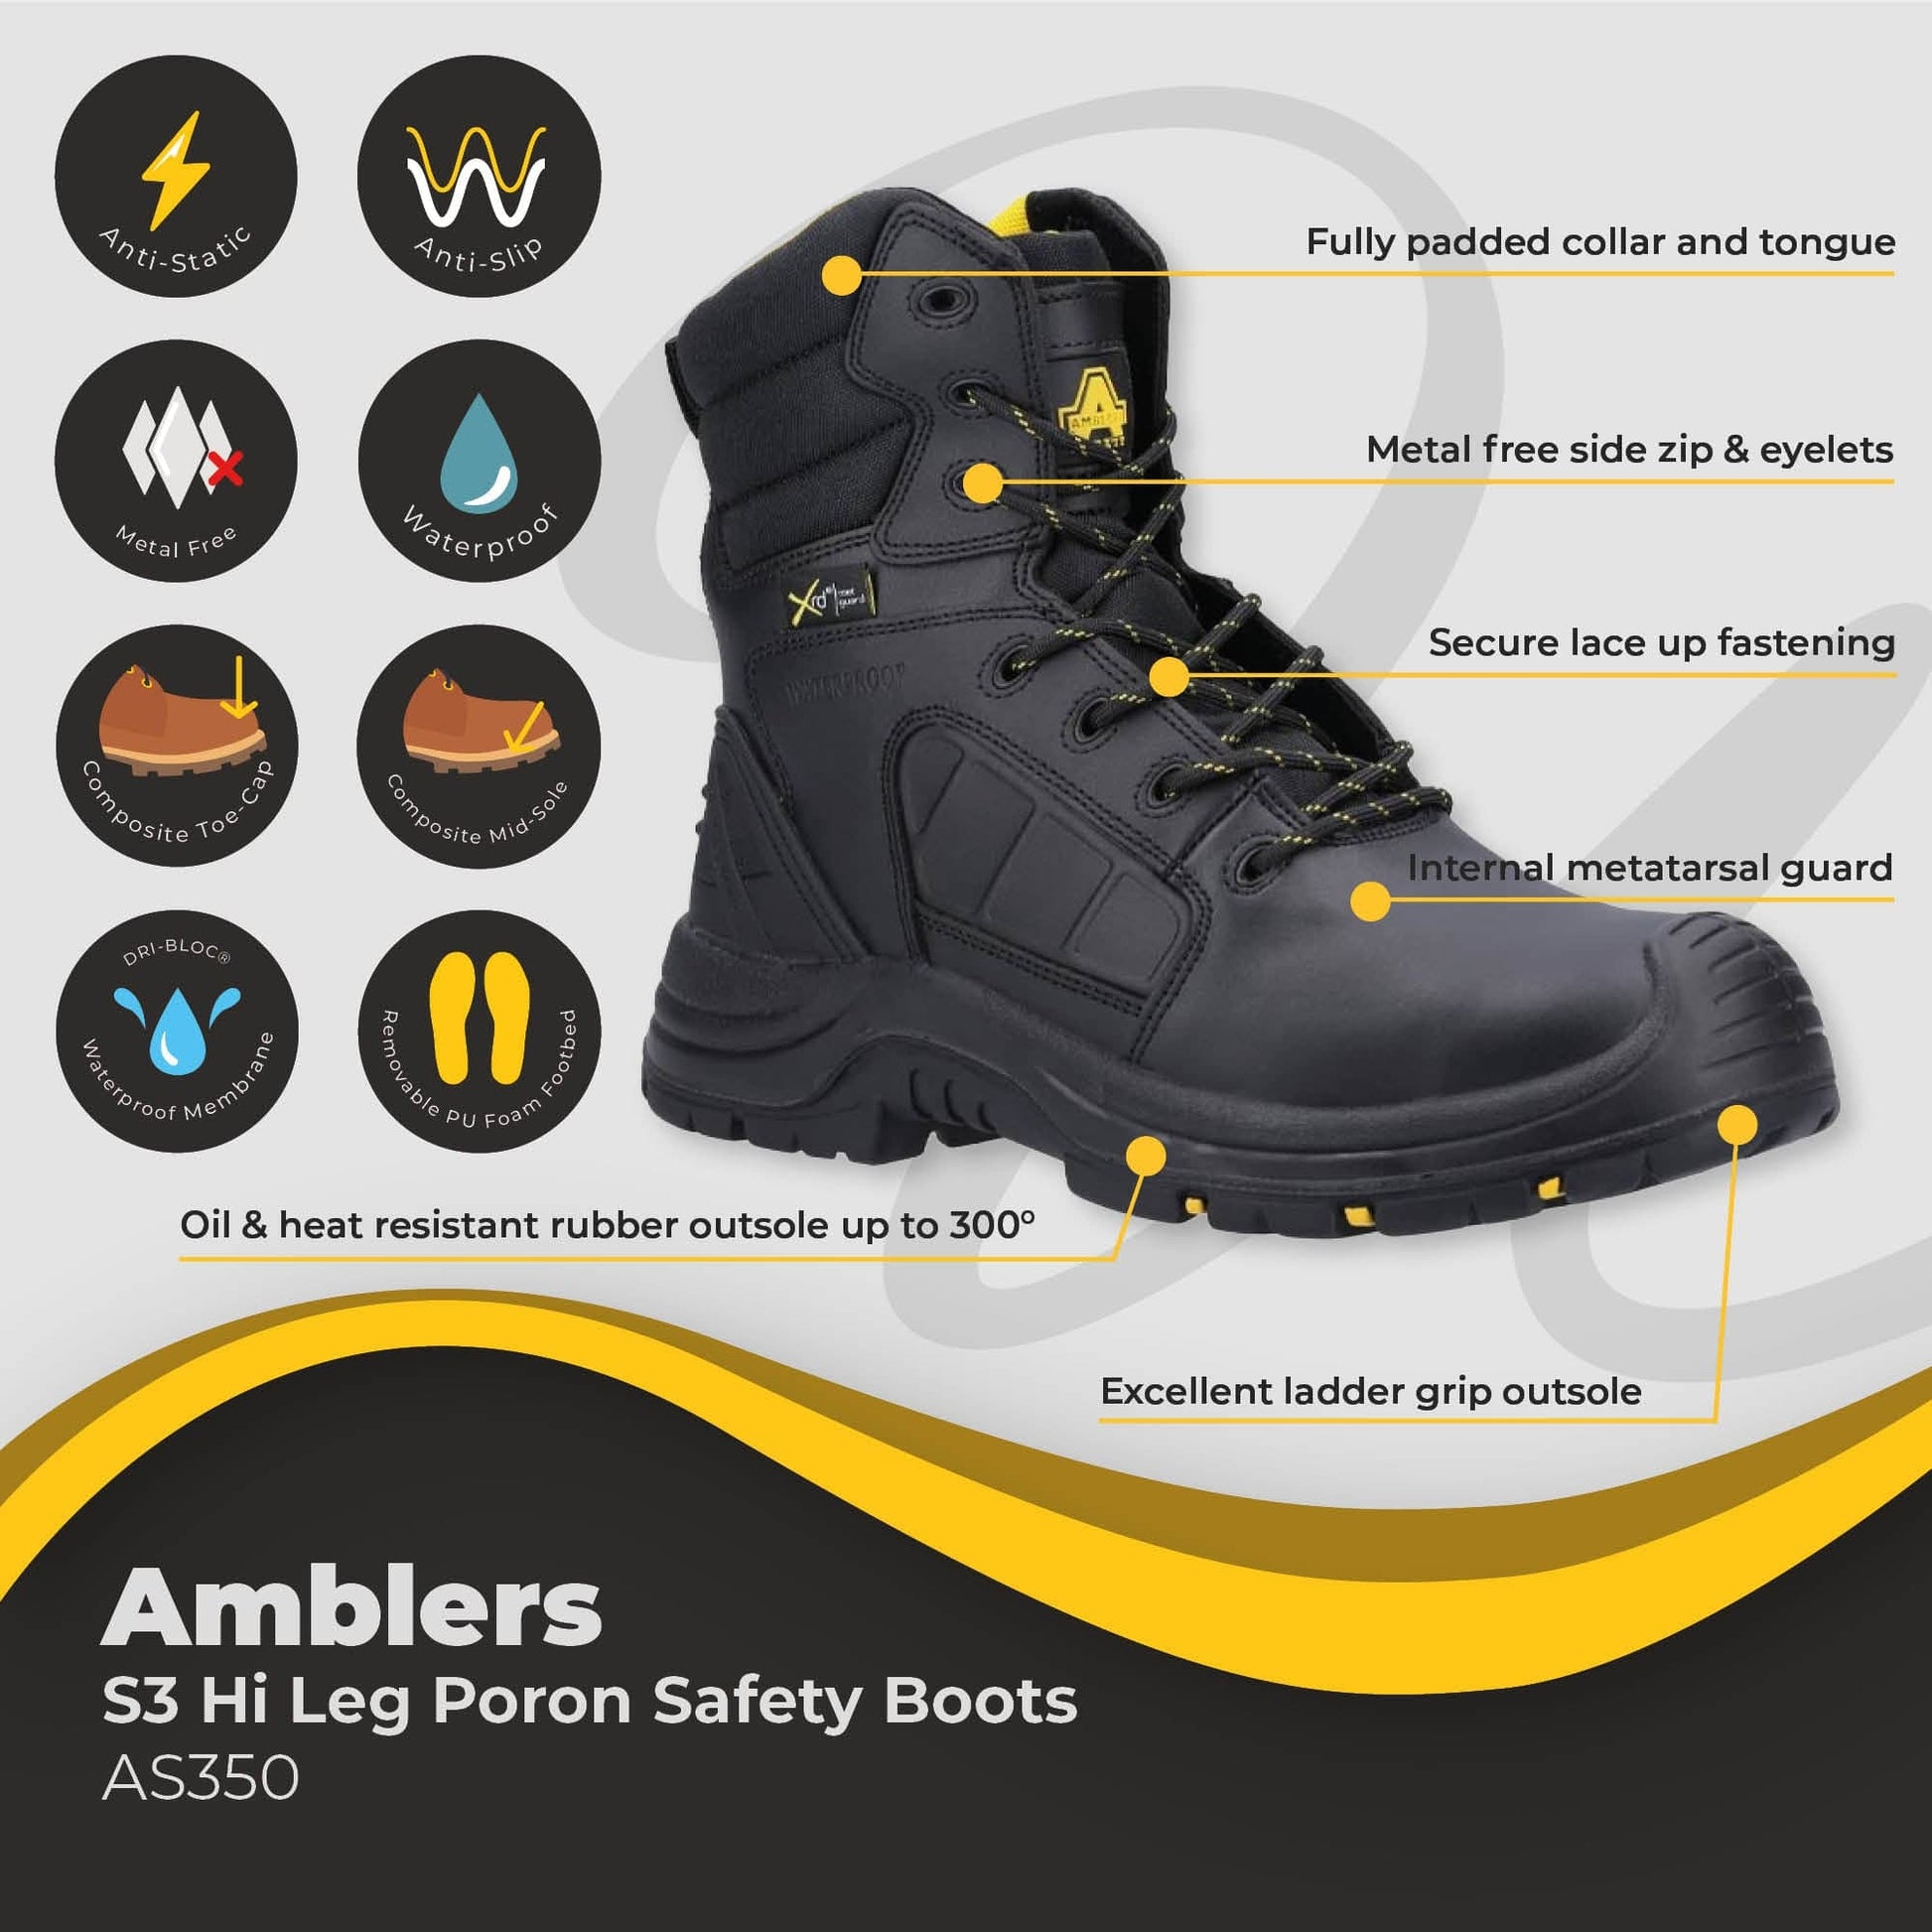 amblers hi leg poron safety boot s3 as350 dd354 06